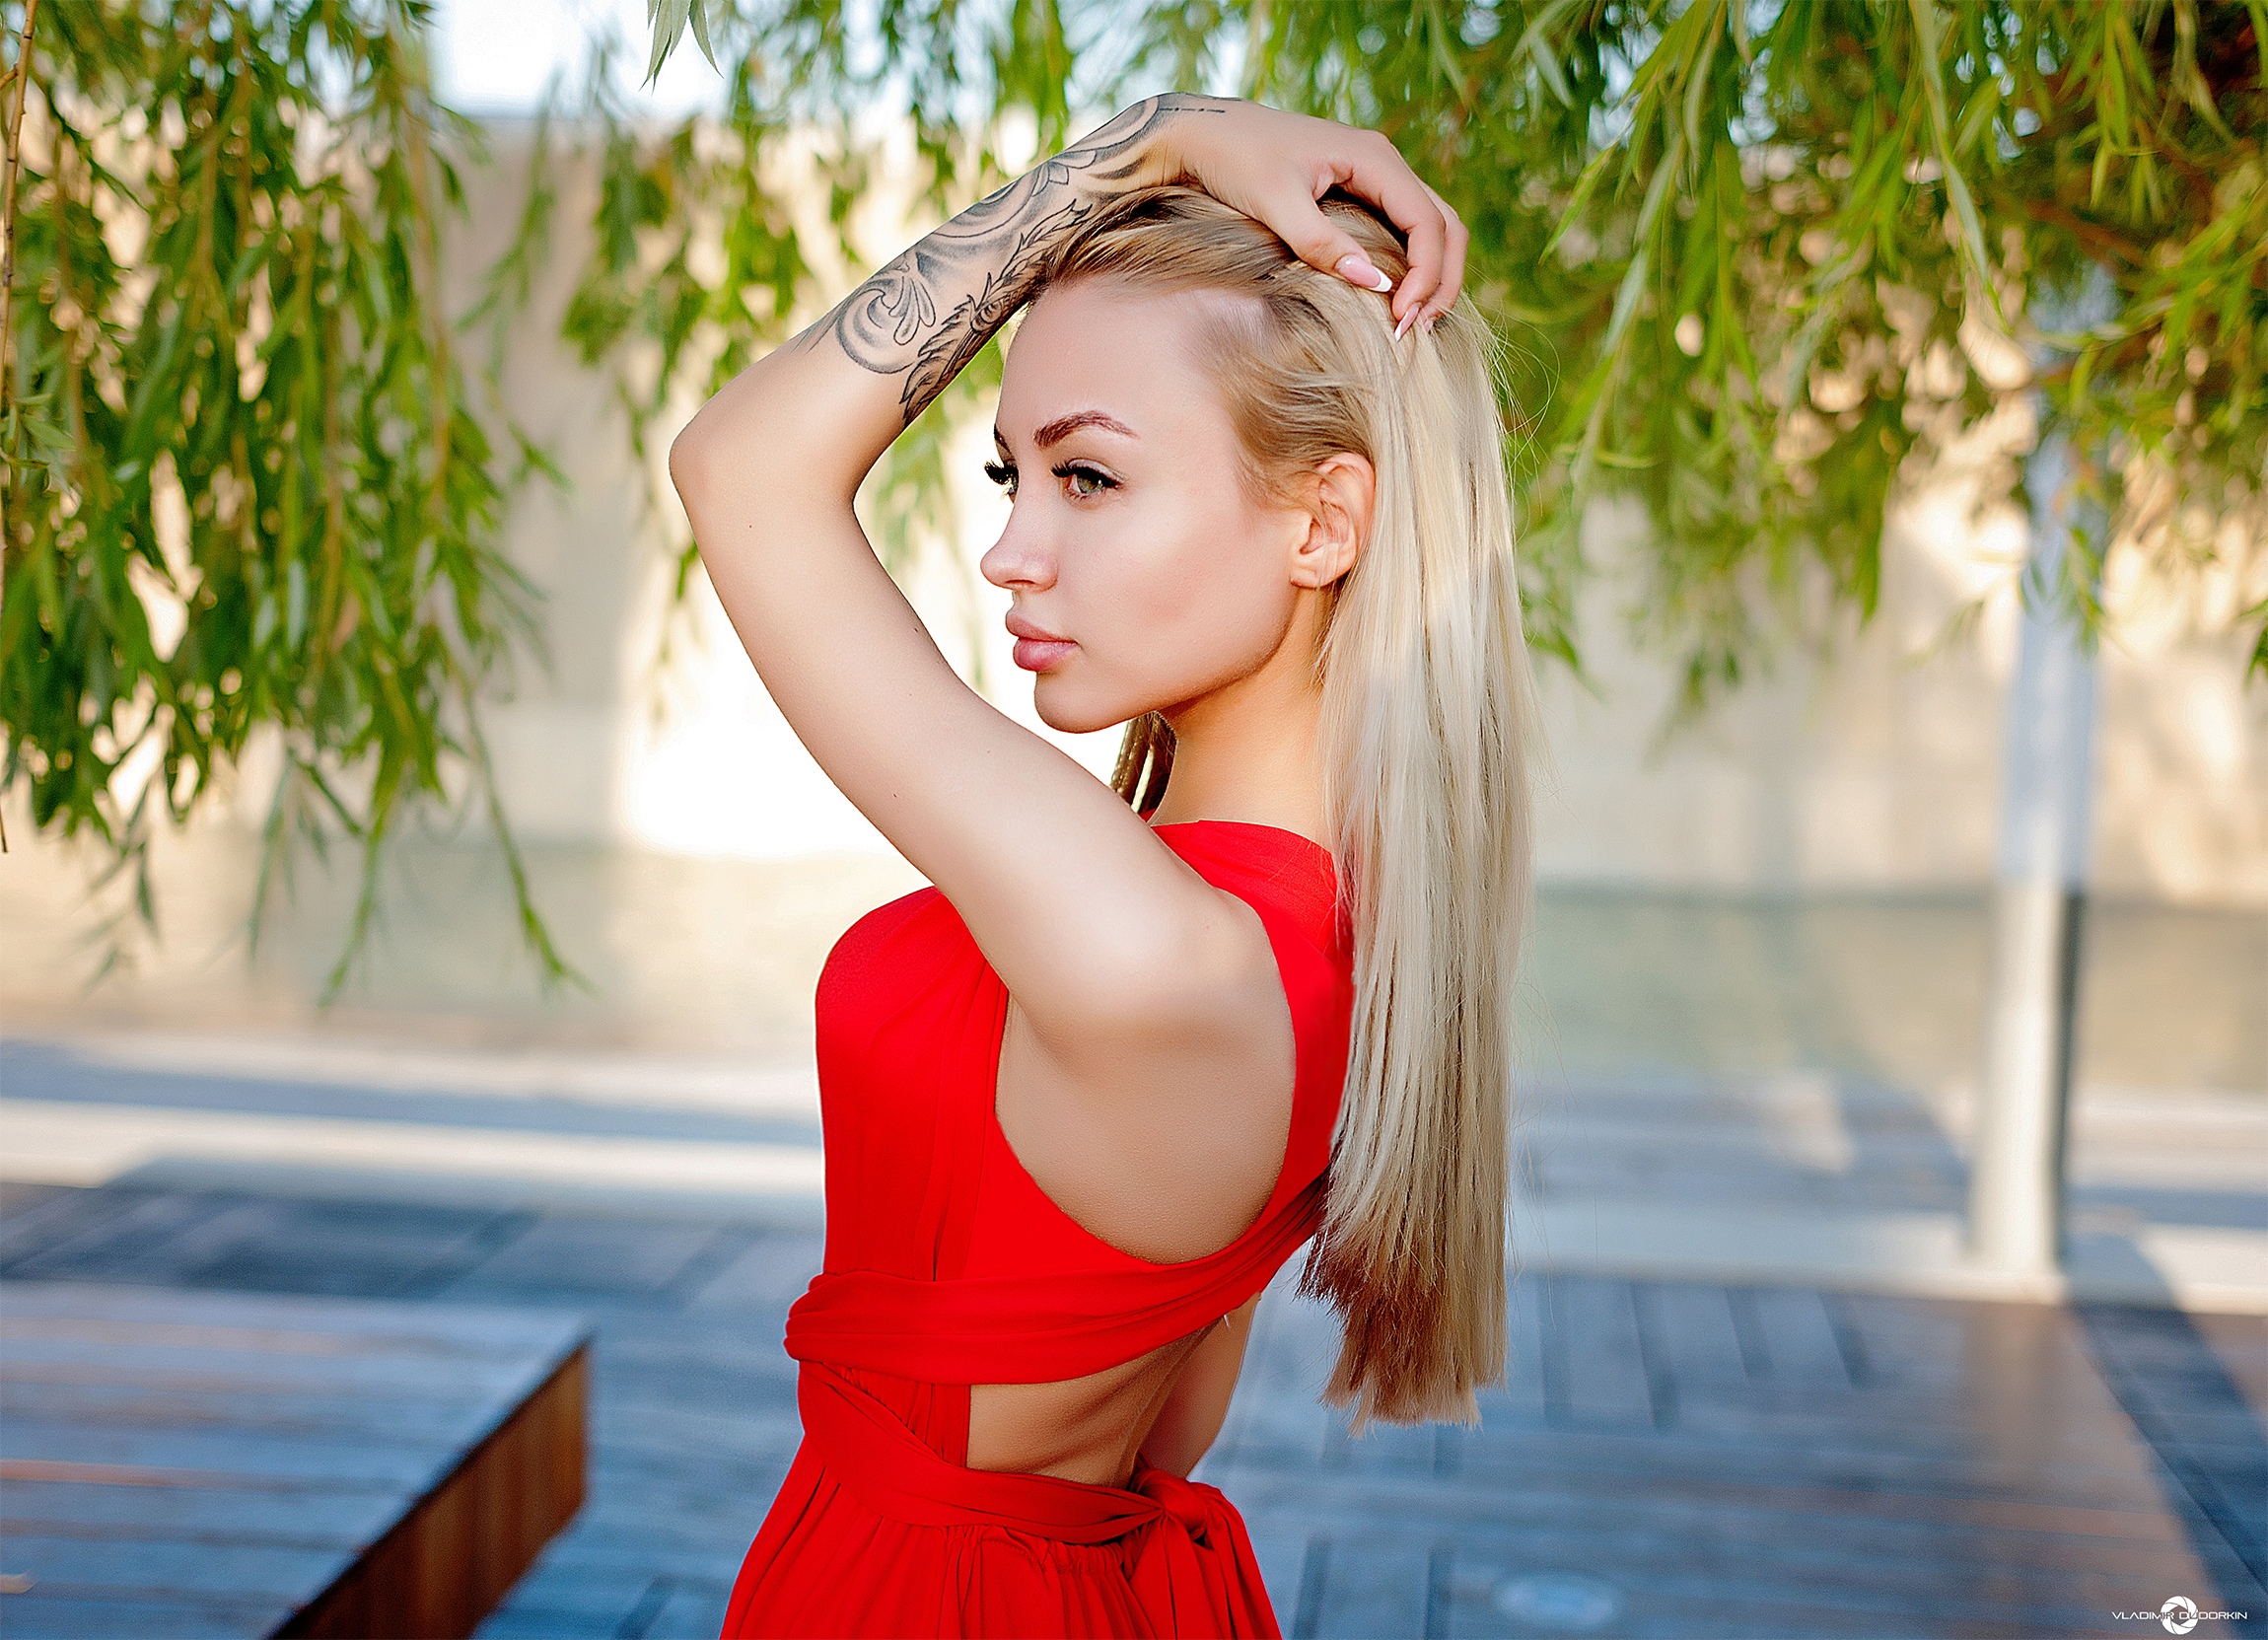 Women Portrait Tattoo Red Dress Long Hair Women Outdoors Looking Away Profile Blonde Vladimir 2300x1663